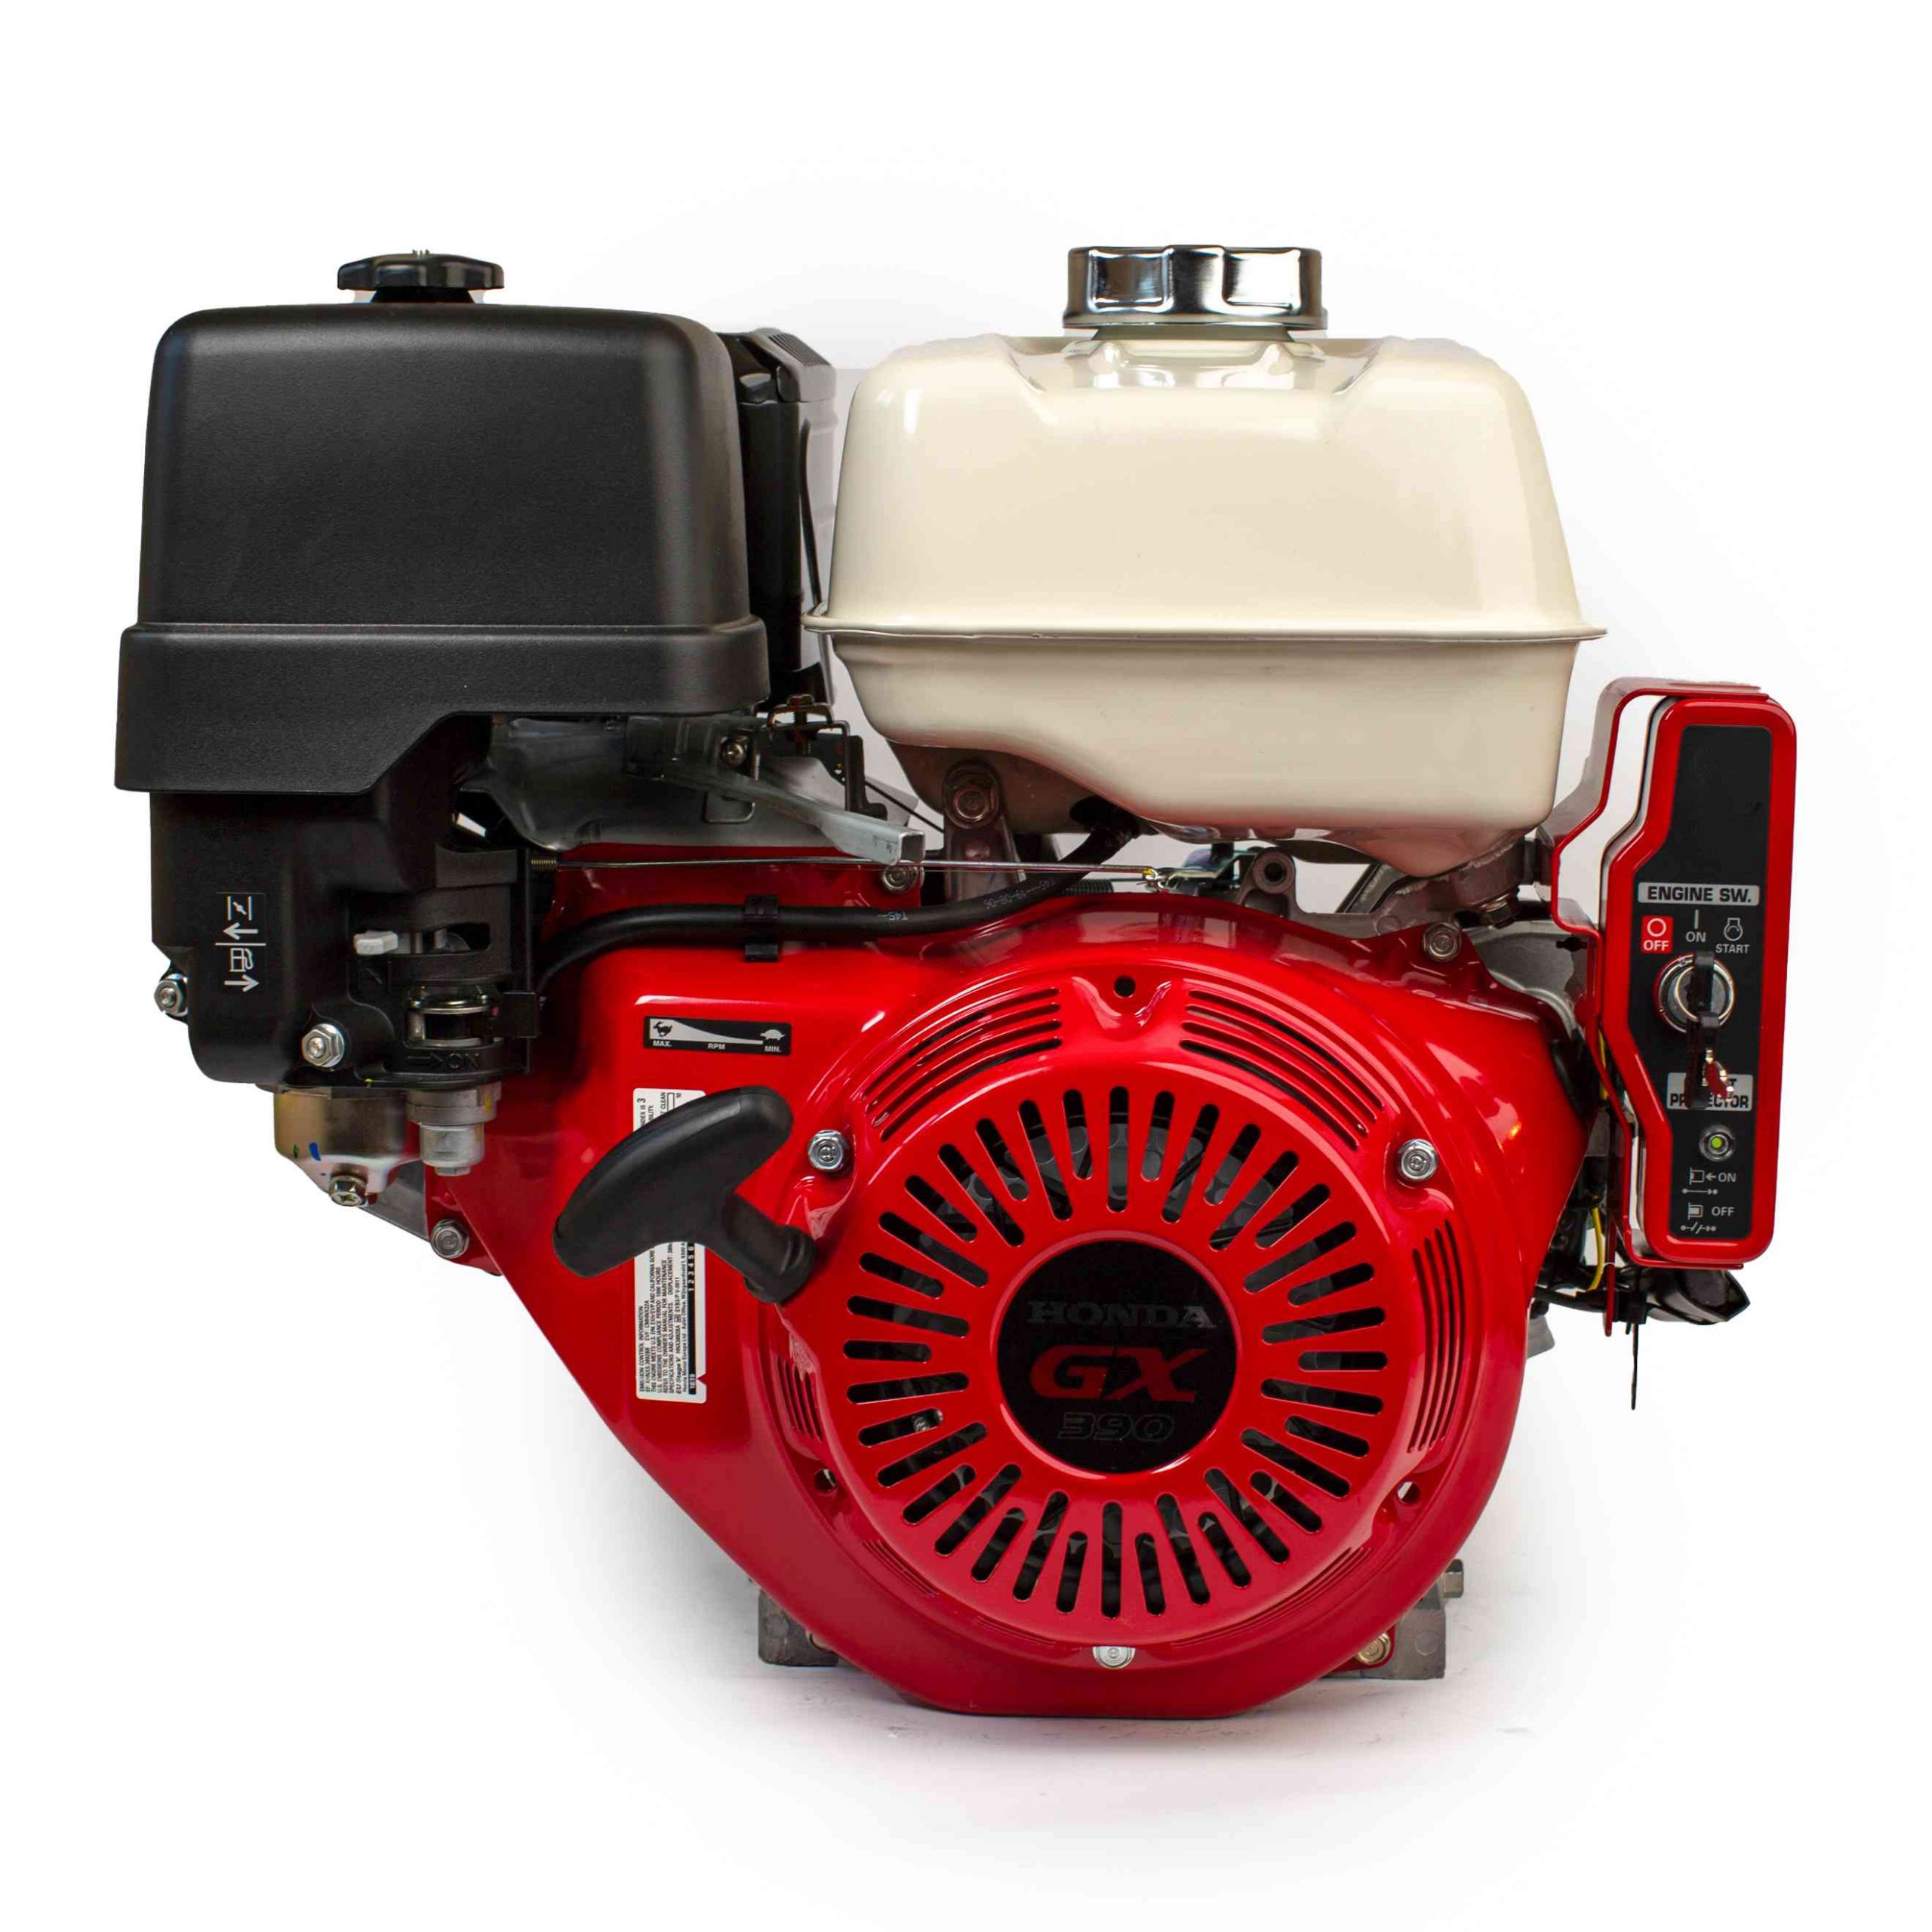 17210-ZE2-515 Air Filter Fits Honda Pressure Washer Engine GX240 GX270 